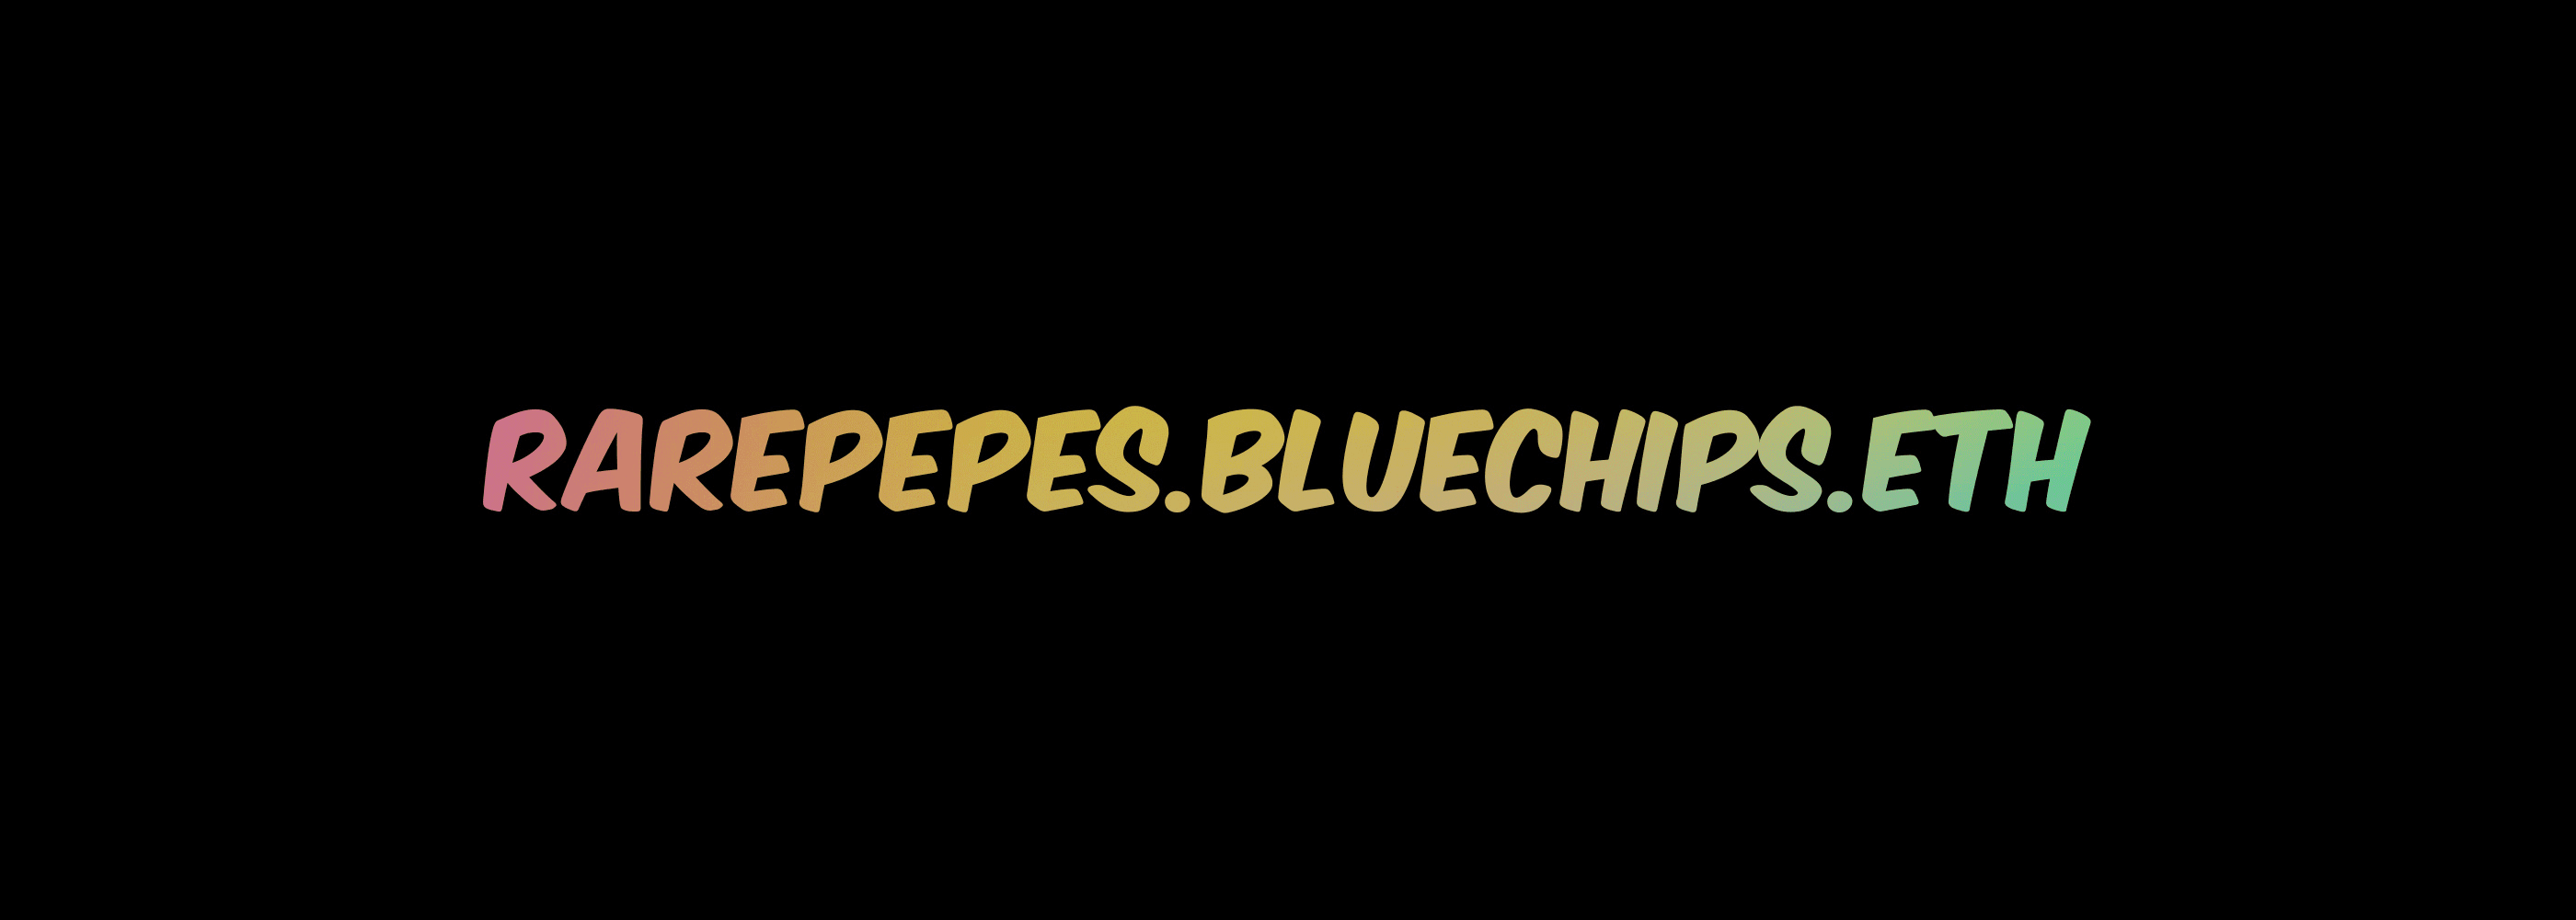 rarepepes.bluechips.eth banner